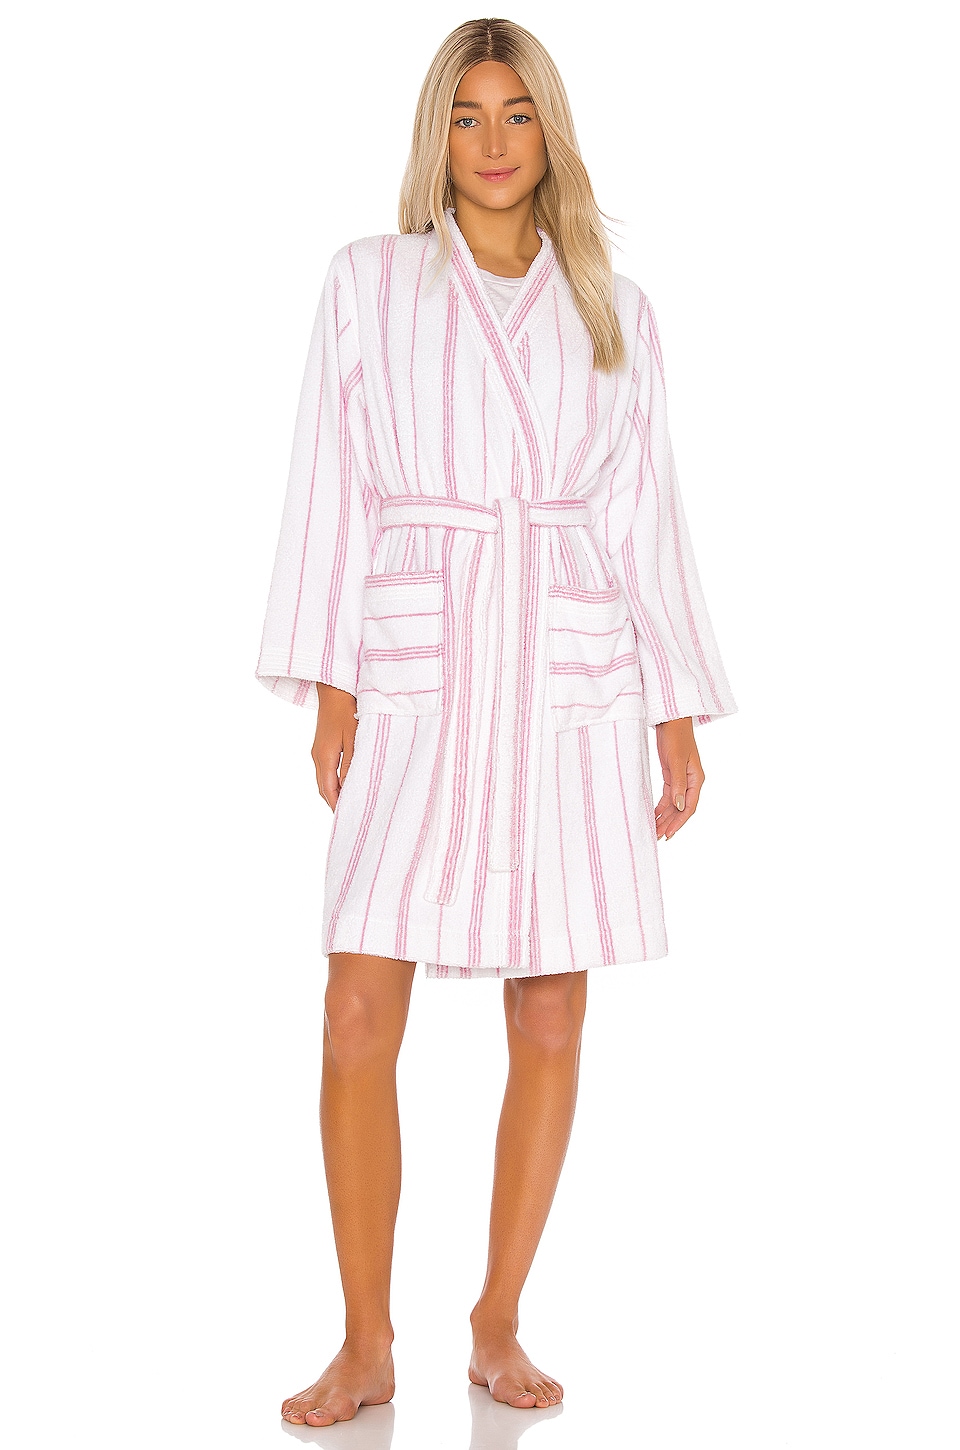 ugg terry robe